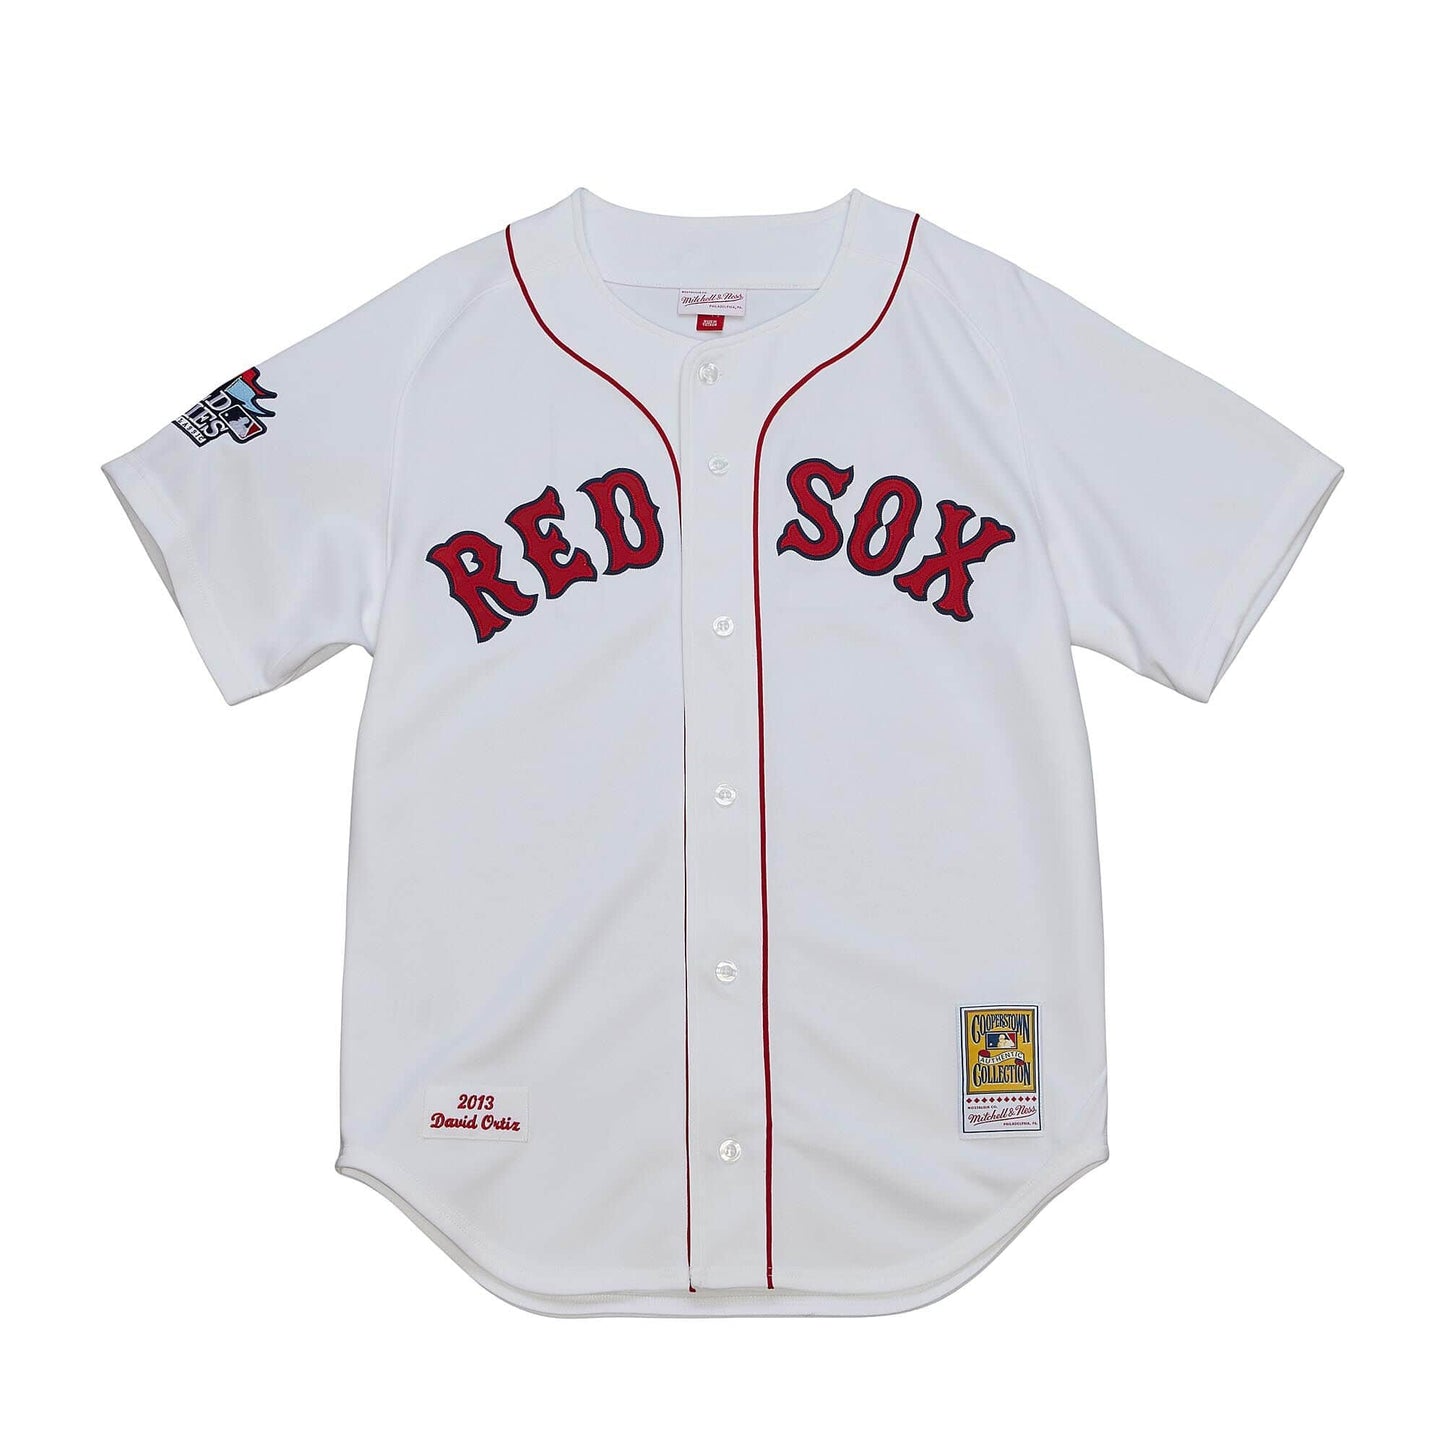 Authentic David Ortiz Boston Red Sox Home 2013 Jersey